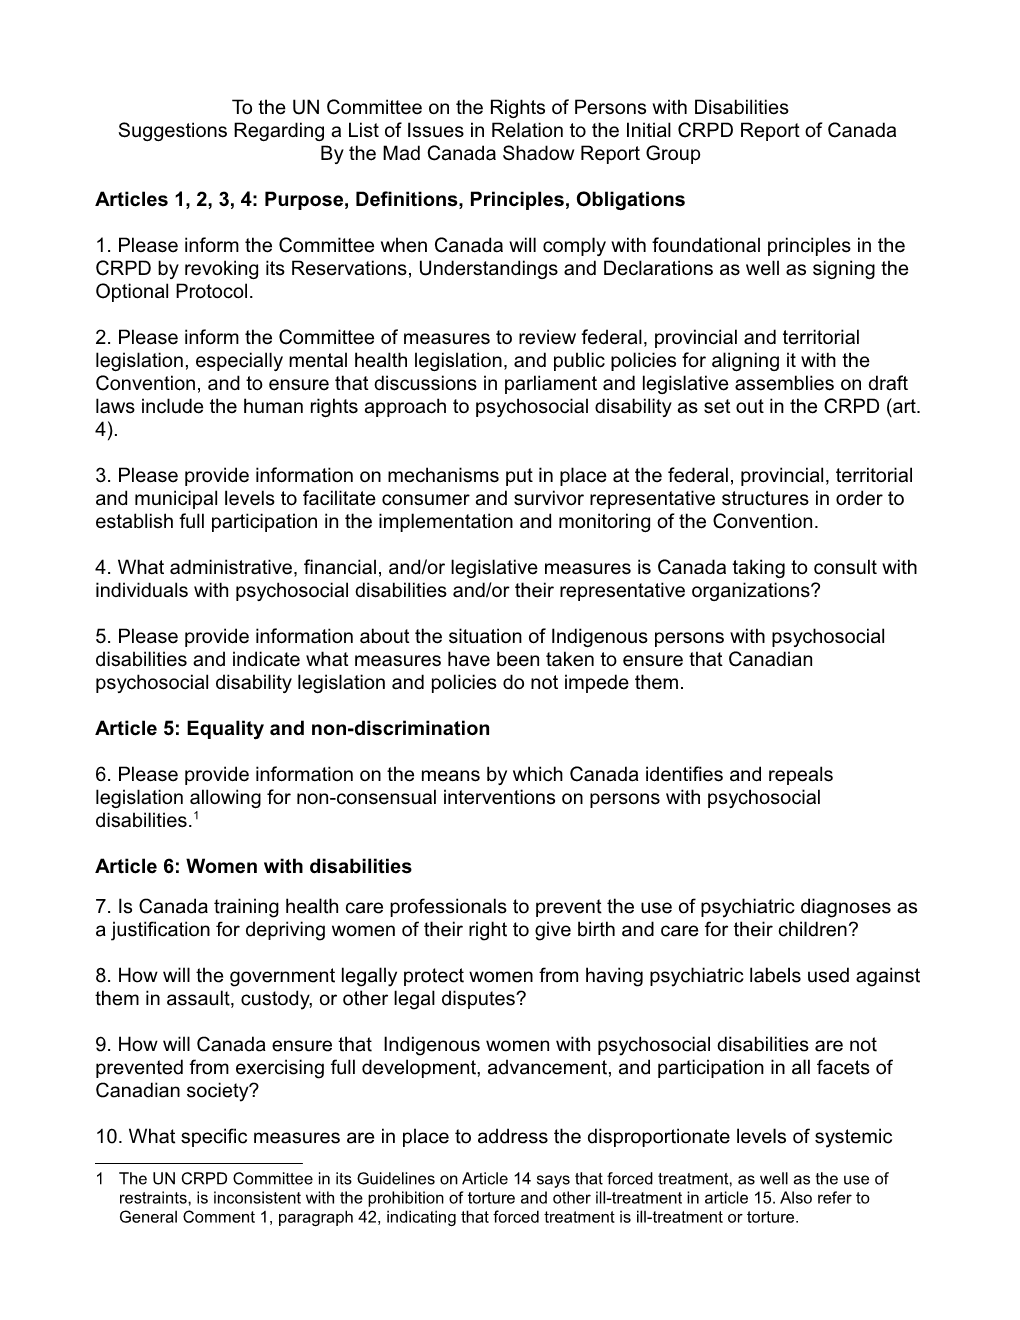 Articles 1, 2, 3, 4: Purpose, Definitions, Principles, Obligations